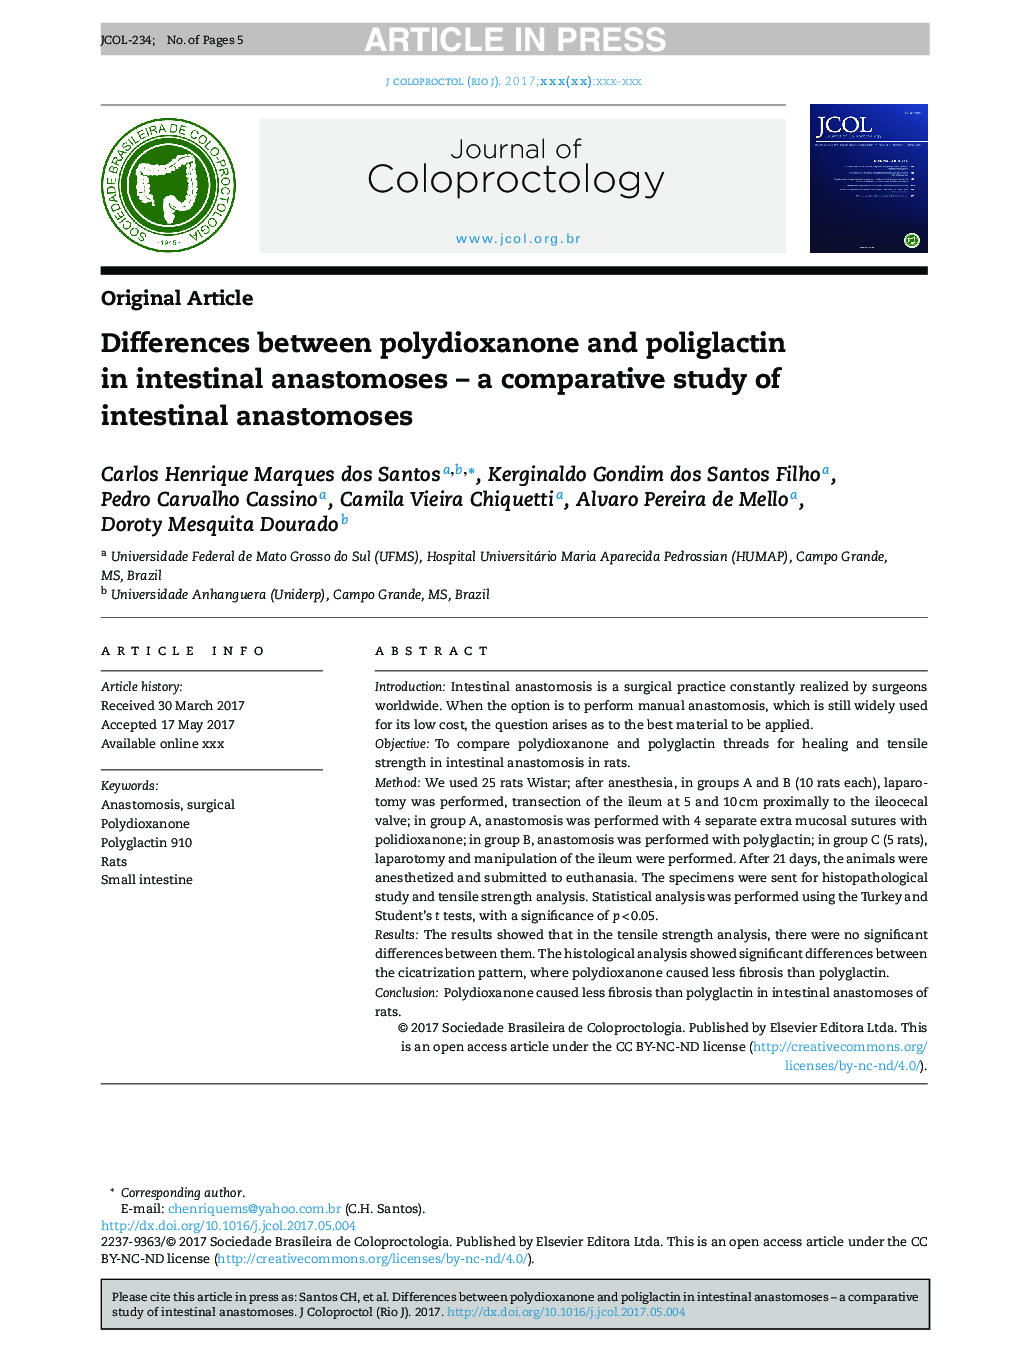 Differences between polydioxanone and poliglactin in intestinal anastomoses - a comparative study of intestinal anastomoses